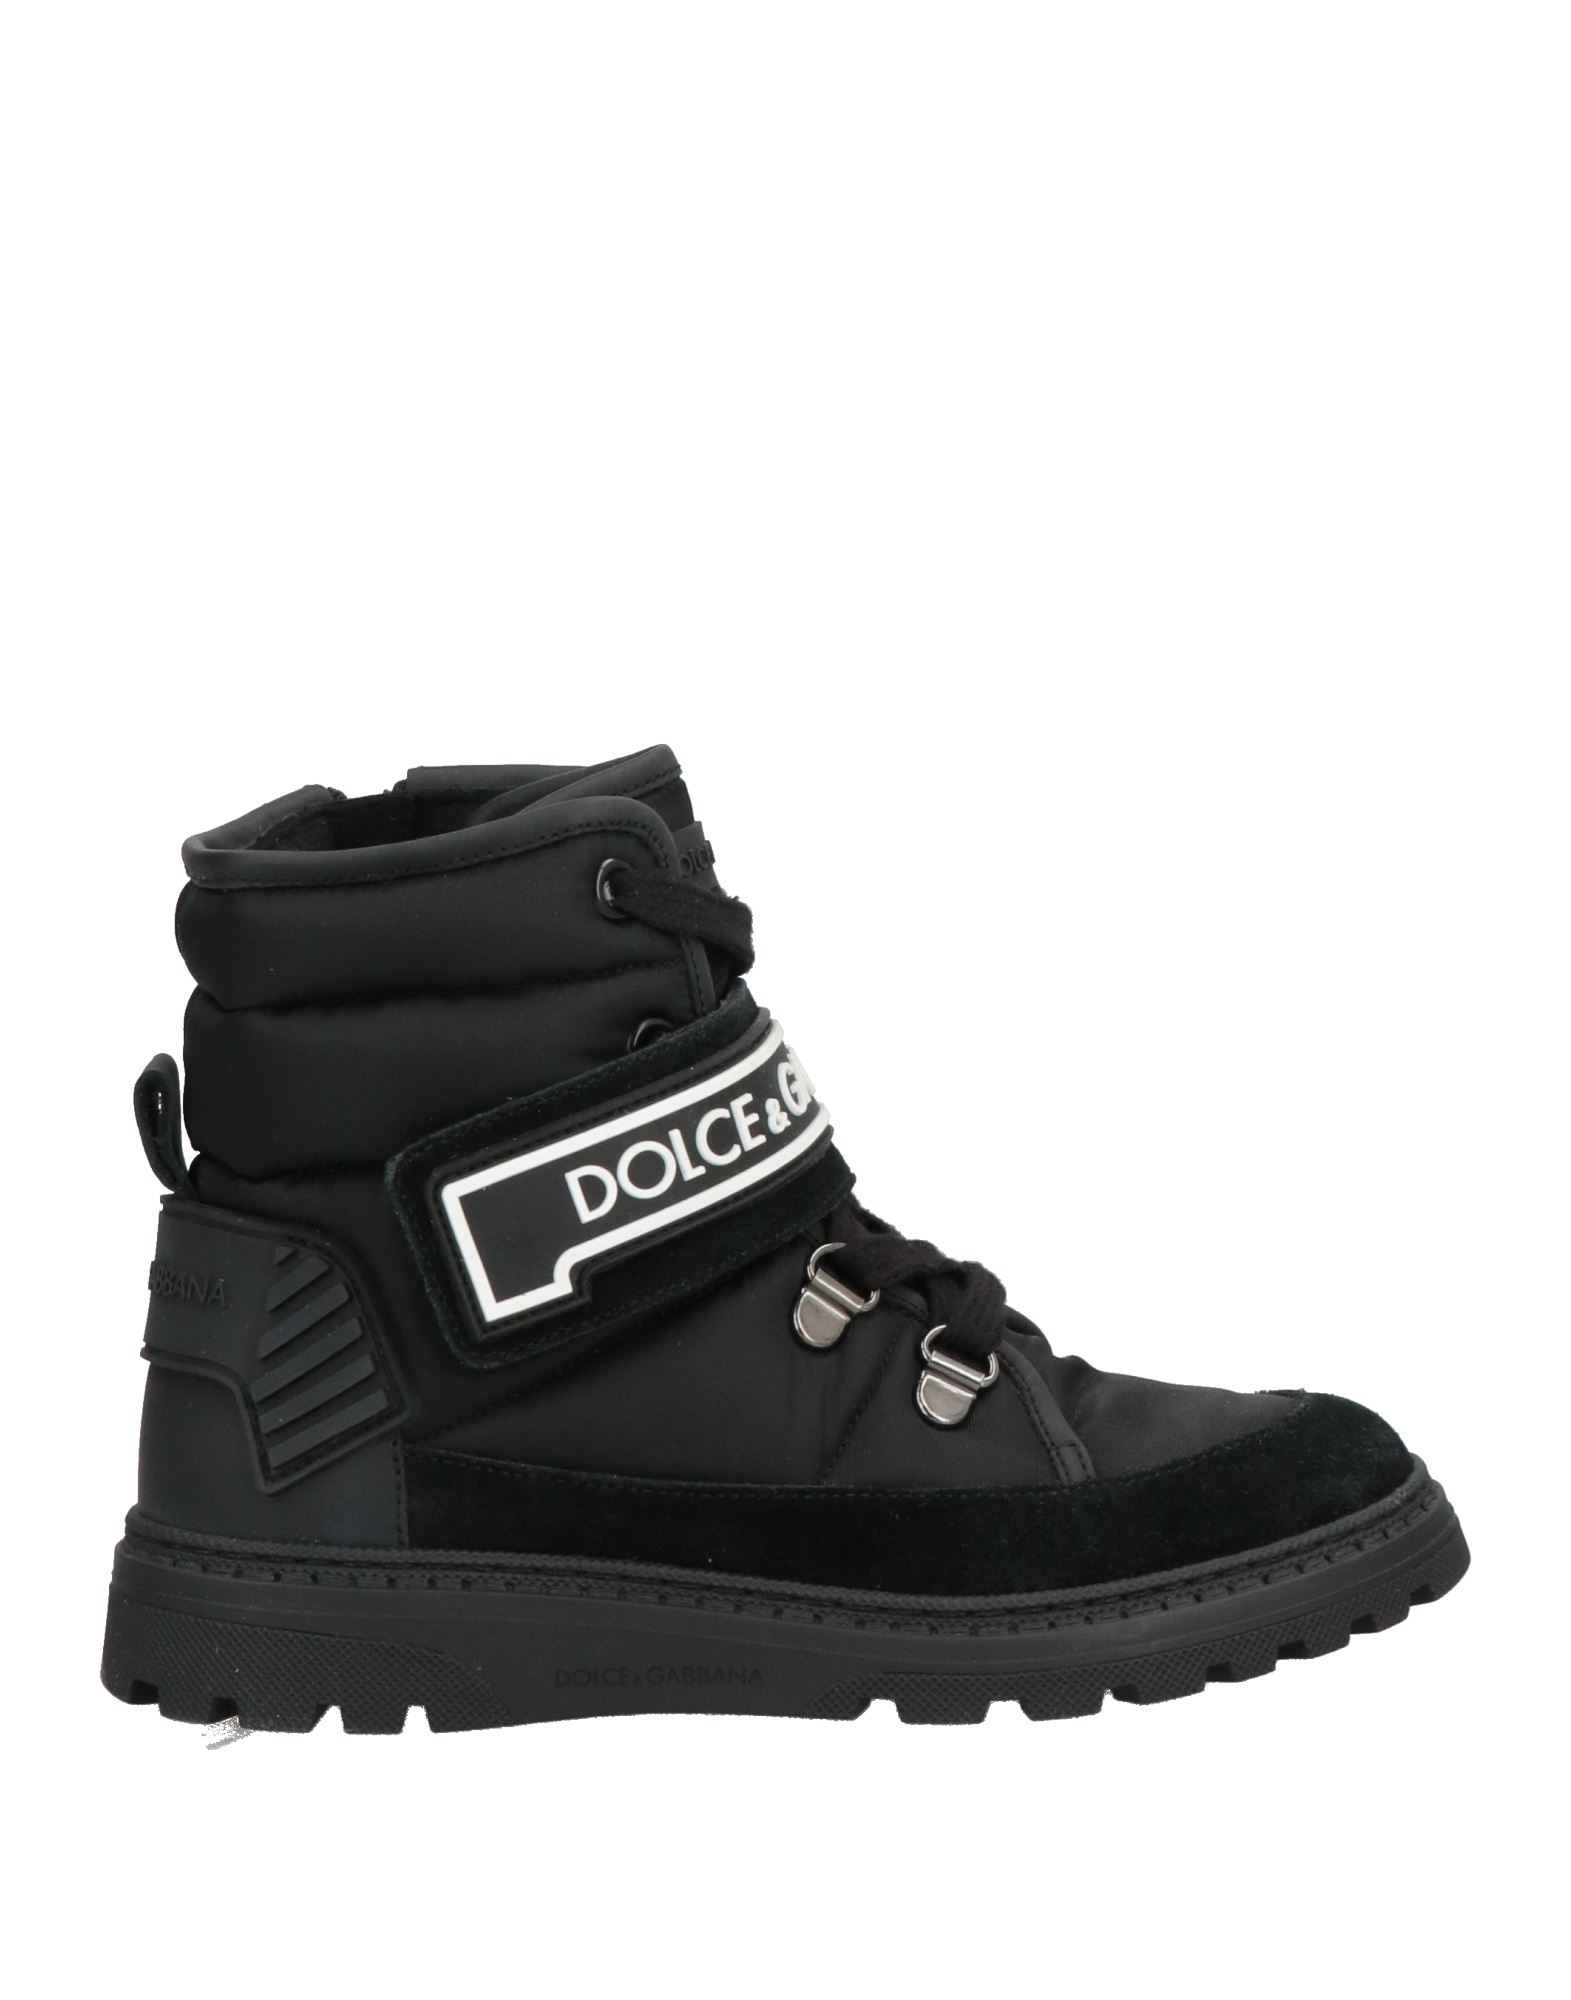 Dolce & Gabbana Kids'  Toddler Boy Ankle Boots Black Size 9c Leather, Textile Fibers